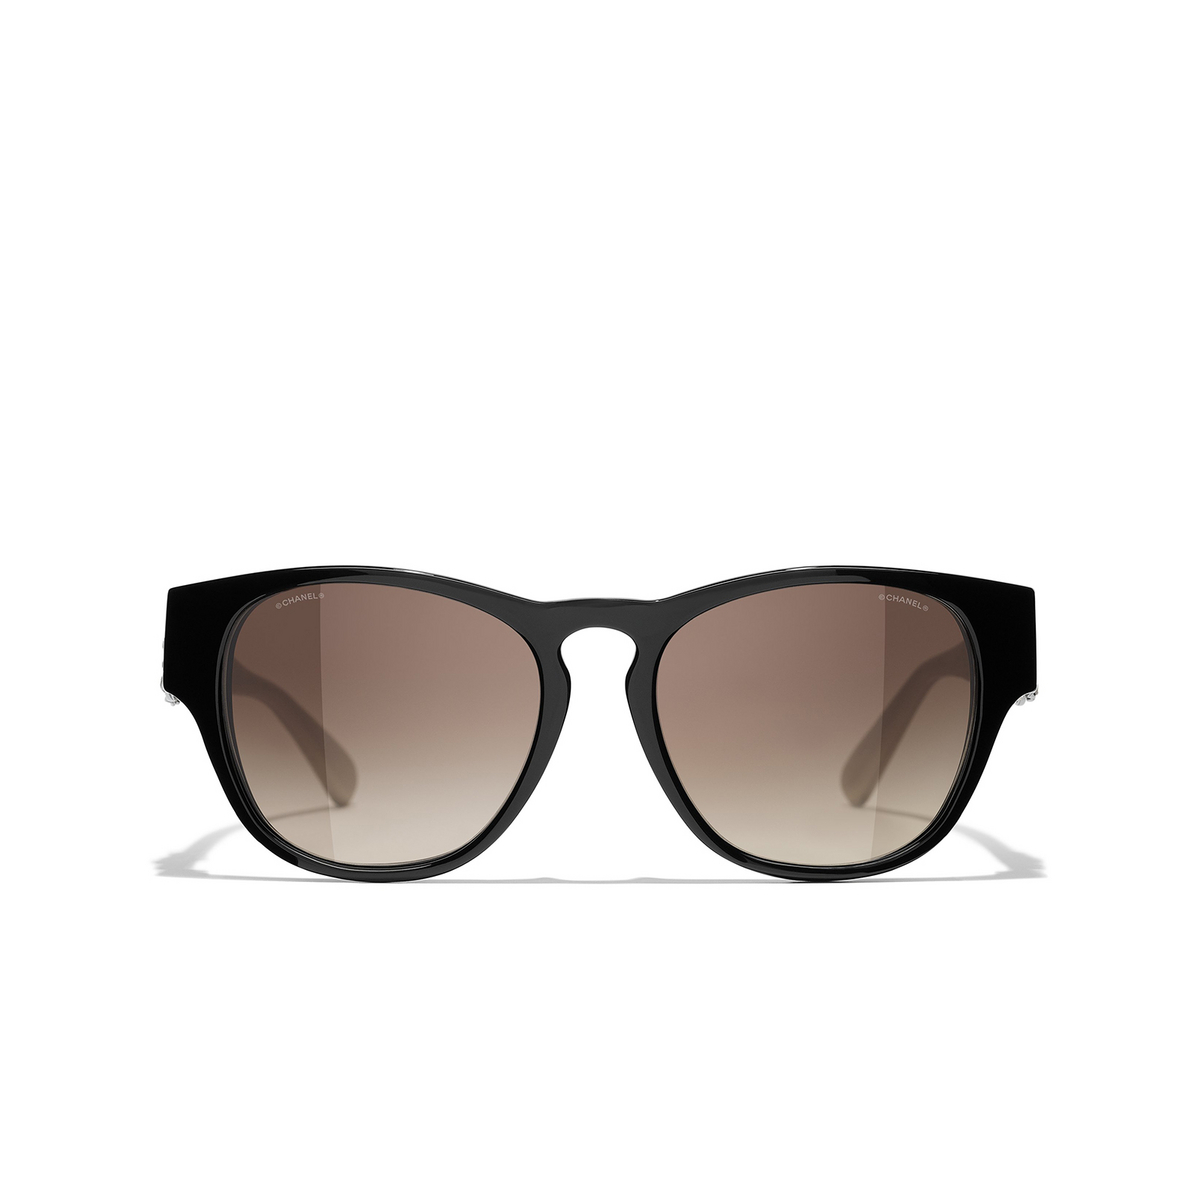 CHANEL rectangle Sunglasses C501S5 Black - front view